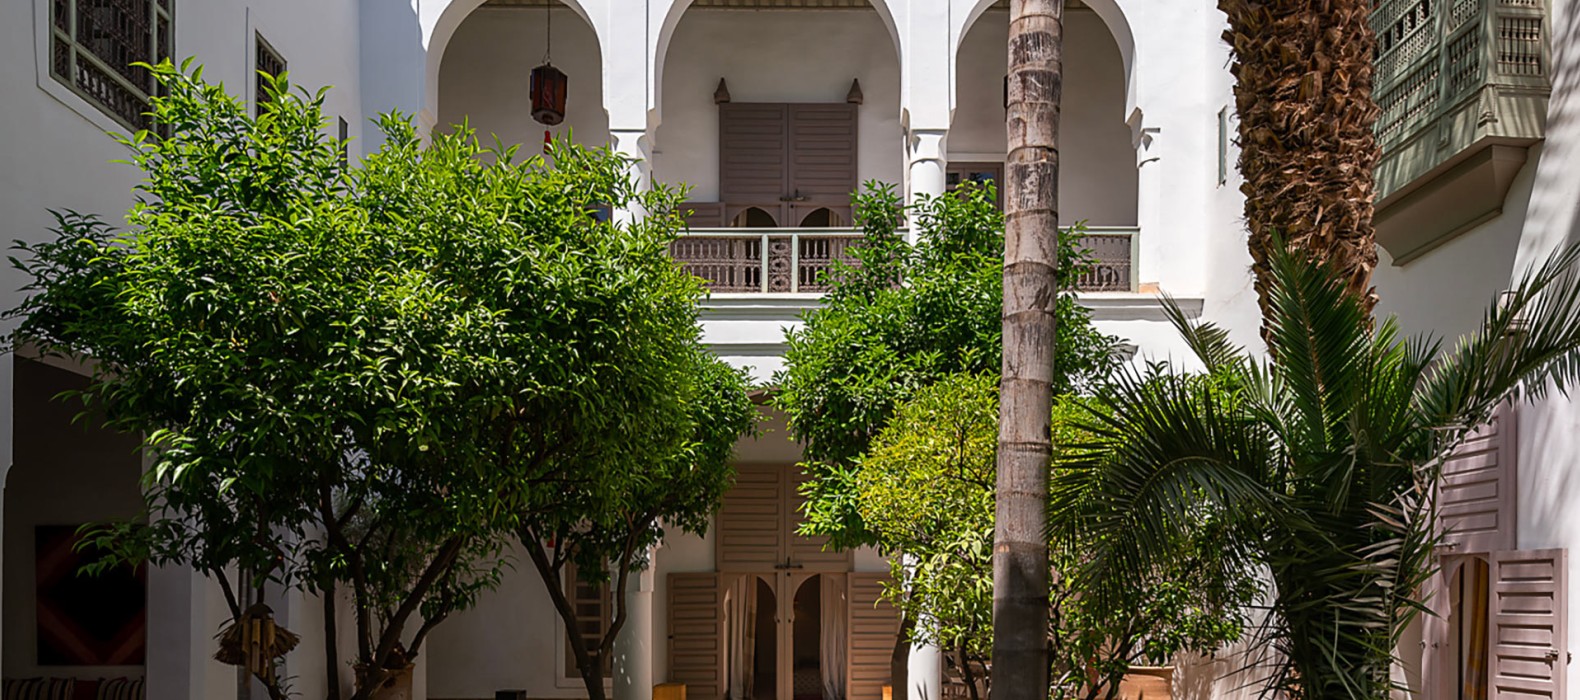 Exterior villa view of Riad B'House in Marrakech